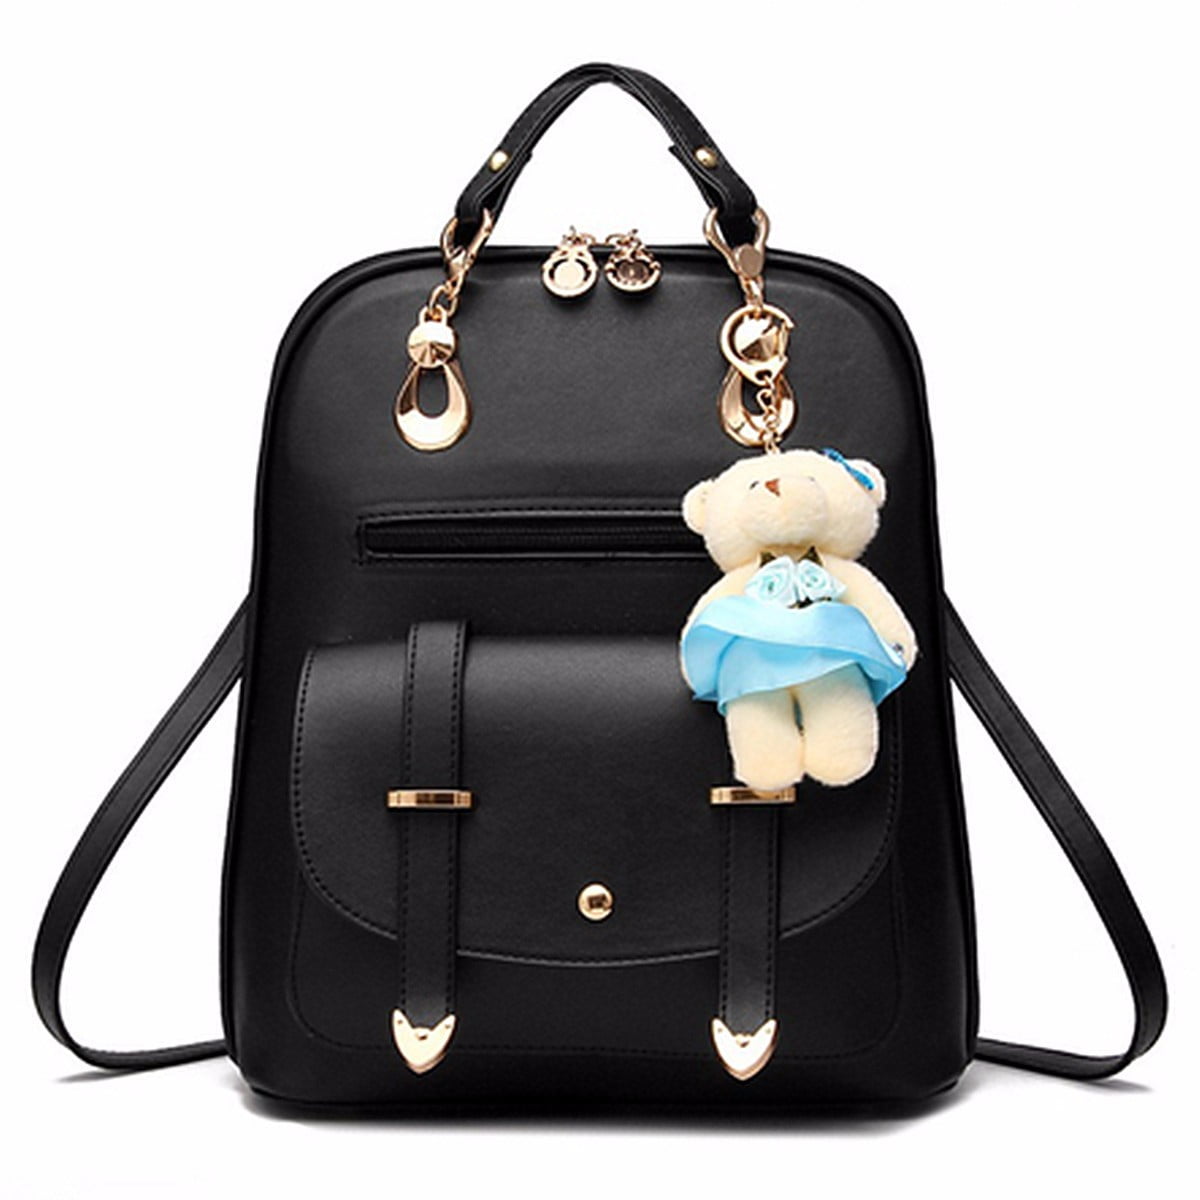 Hynbase Women Mini Leisure Cute Leather Schoolbag Backpack Shoulder Bag Pink